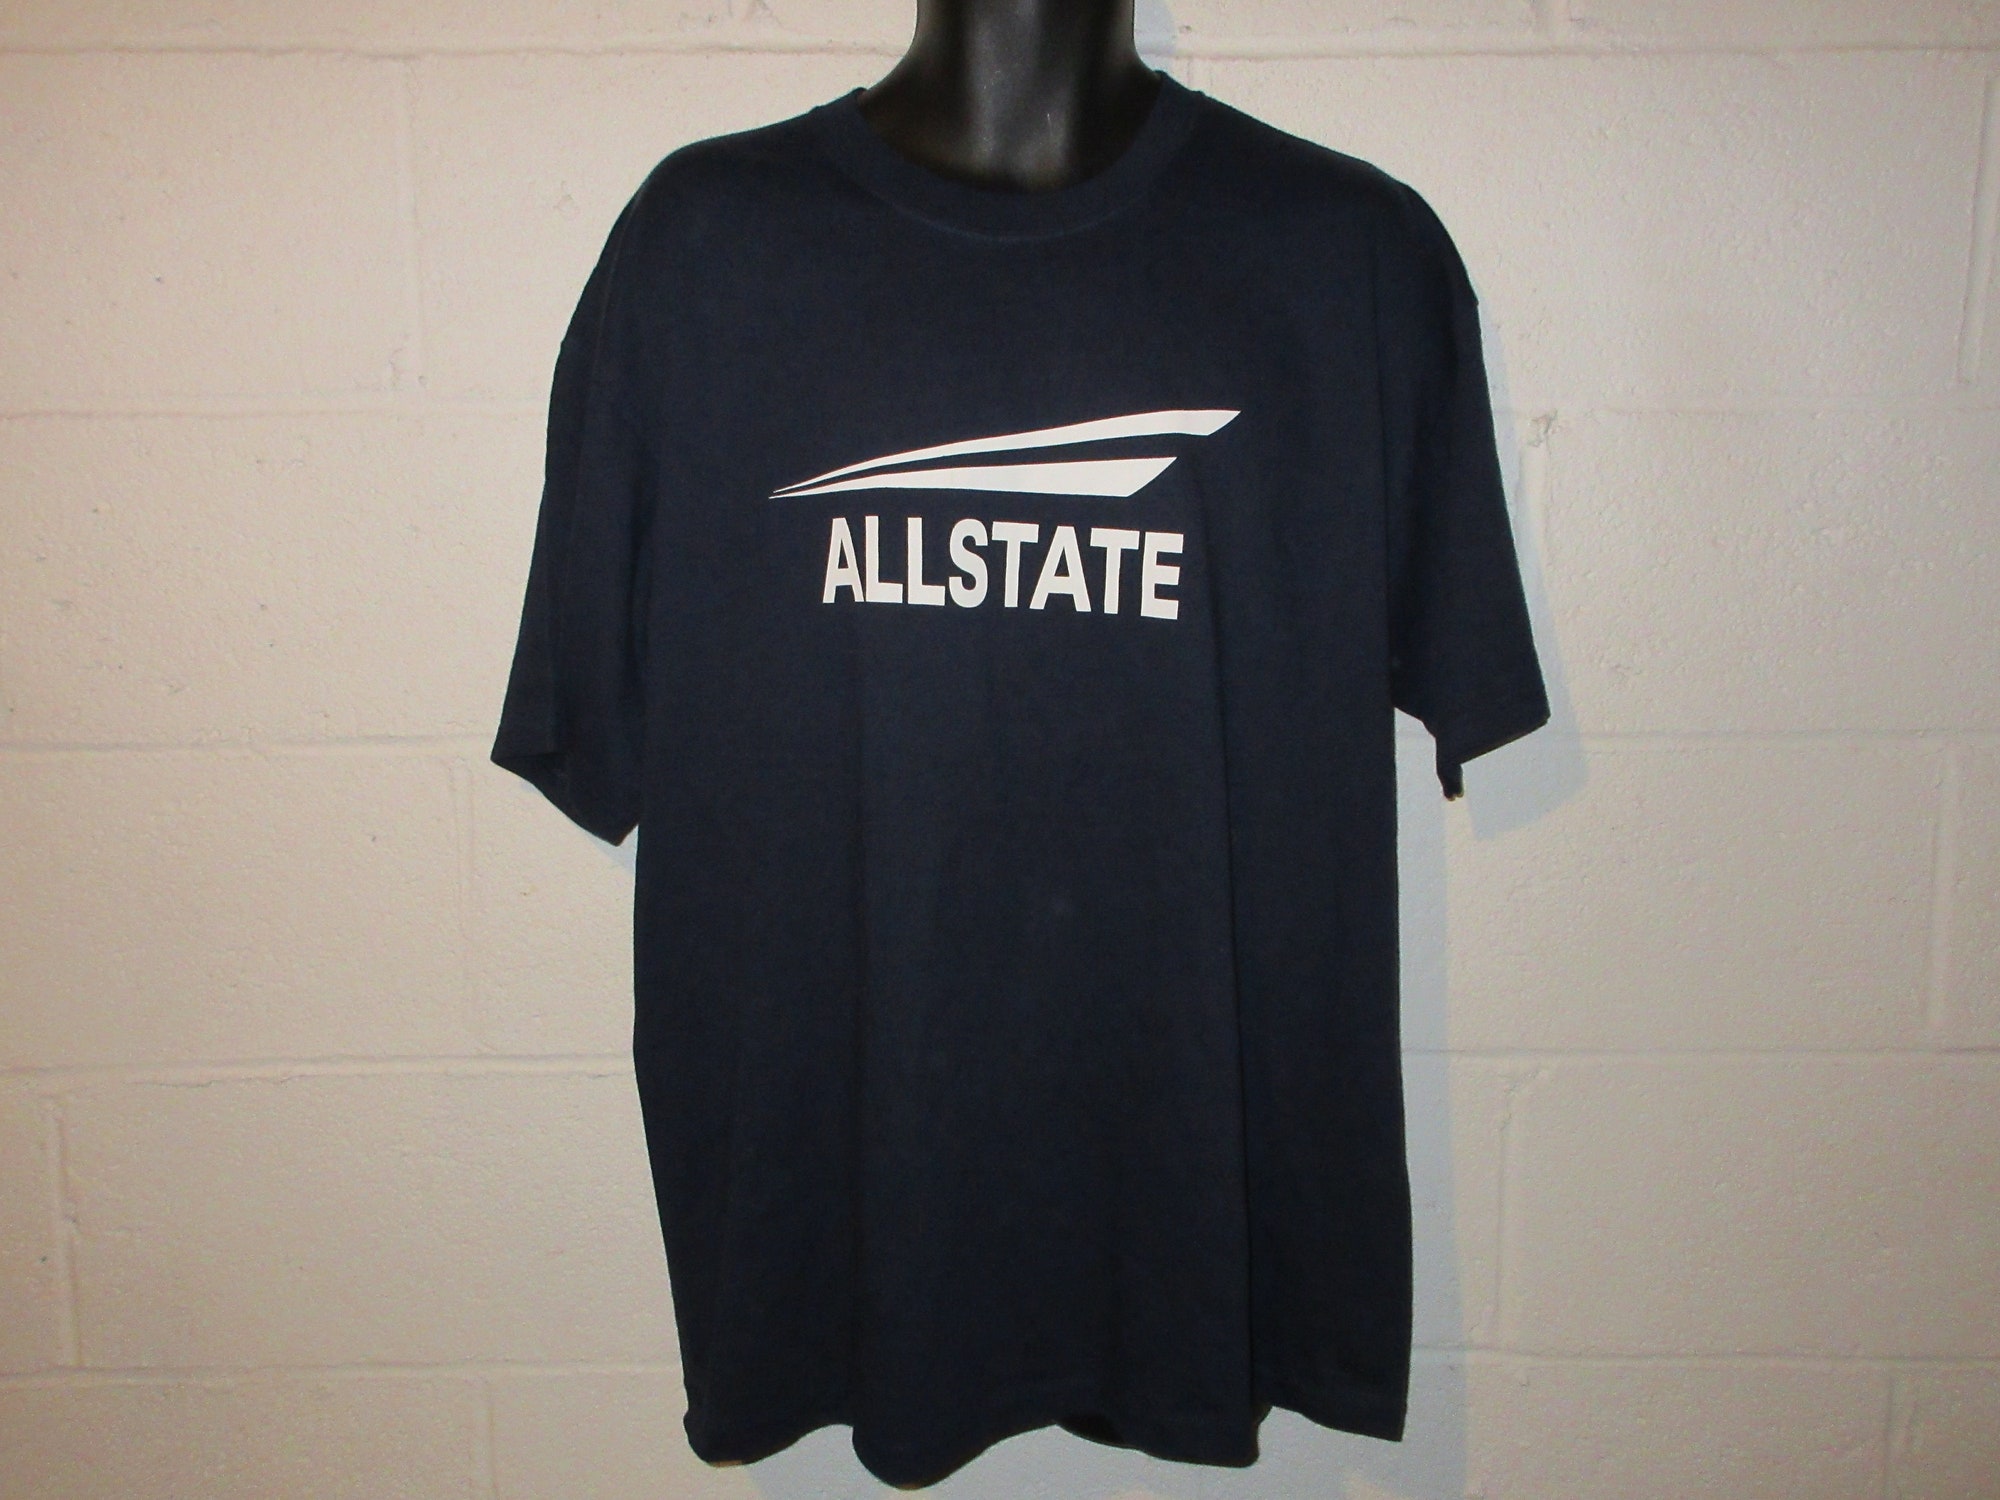 Vintage 90s Allstate Riding Da Roll T-Shirt